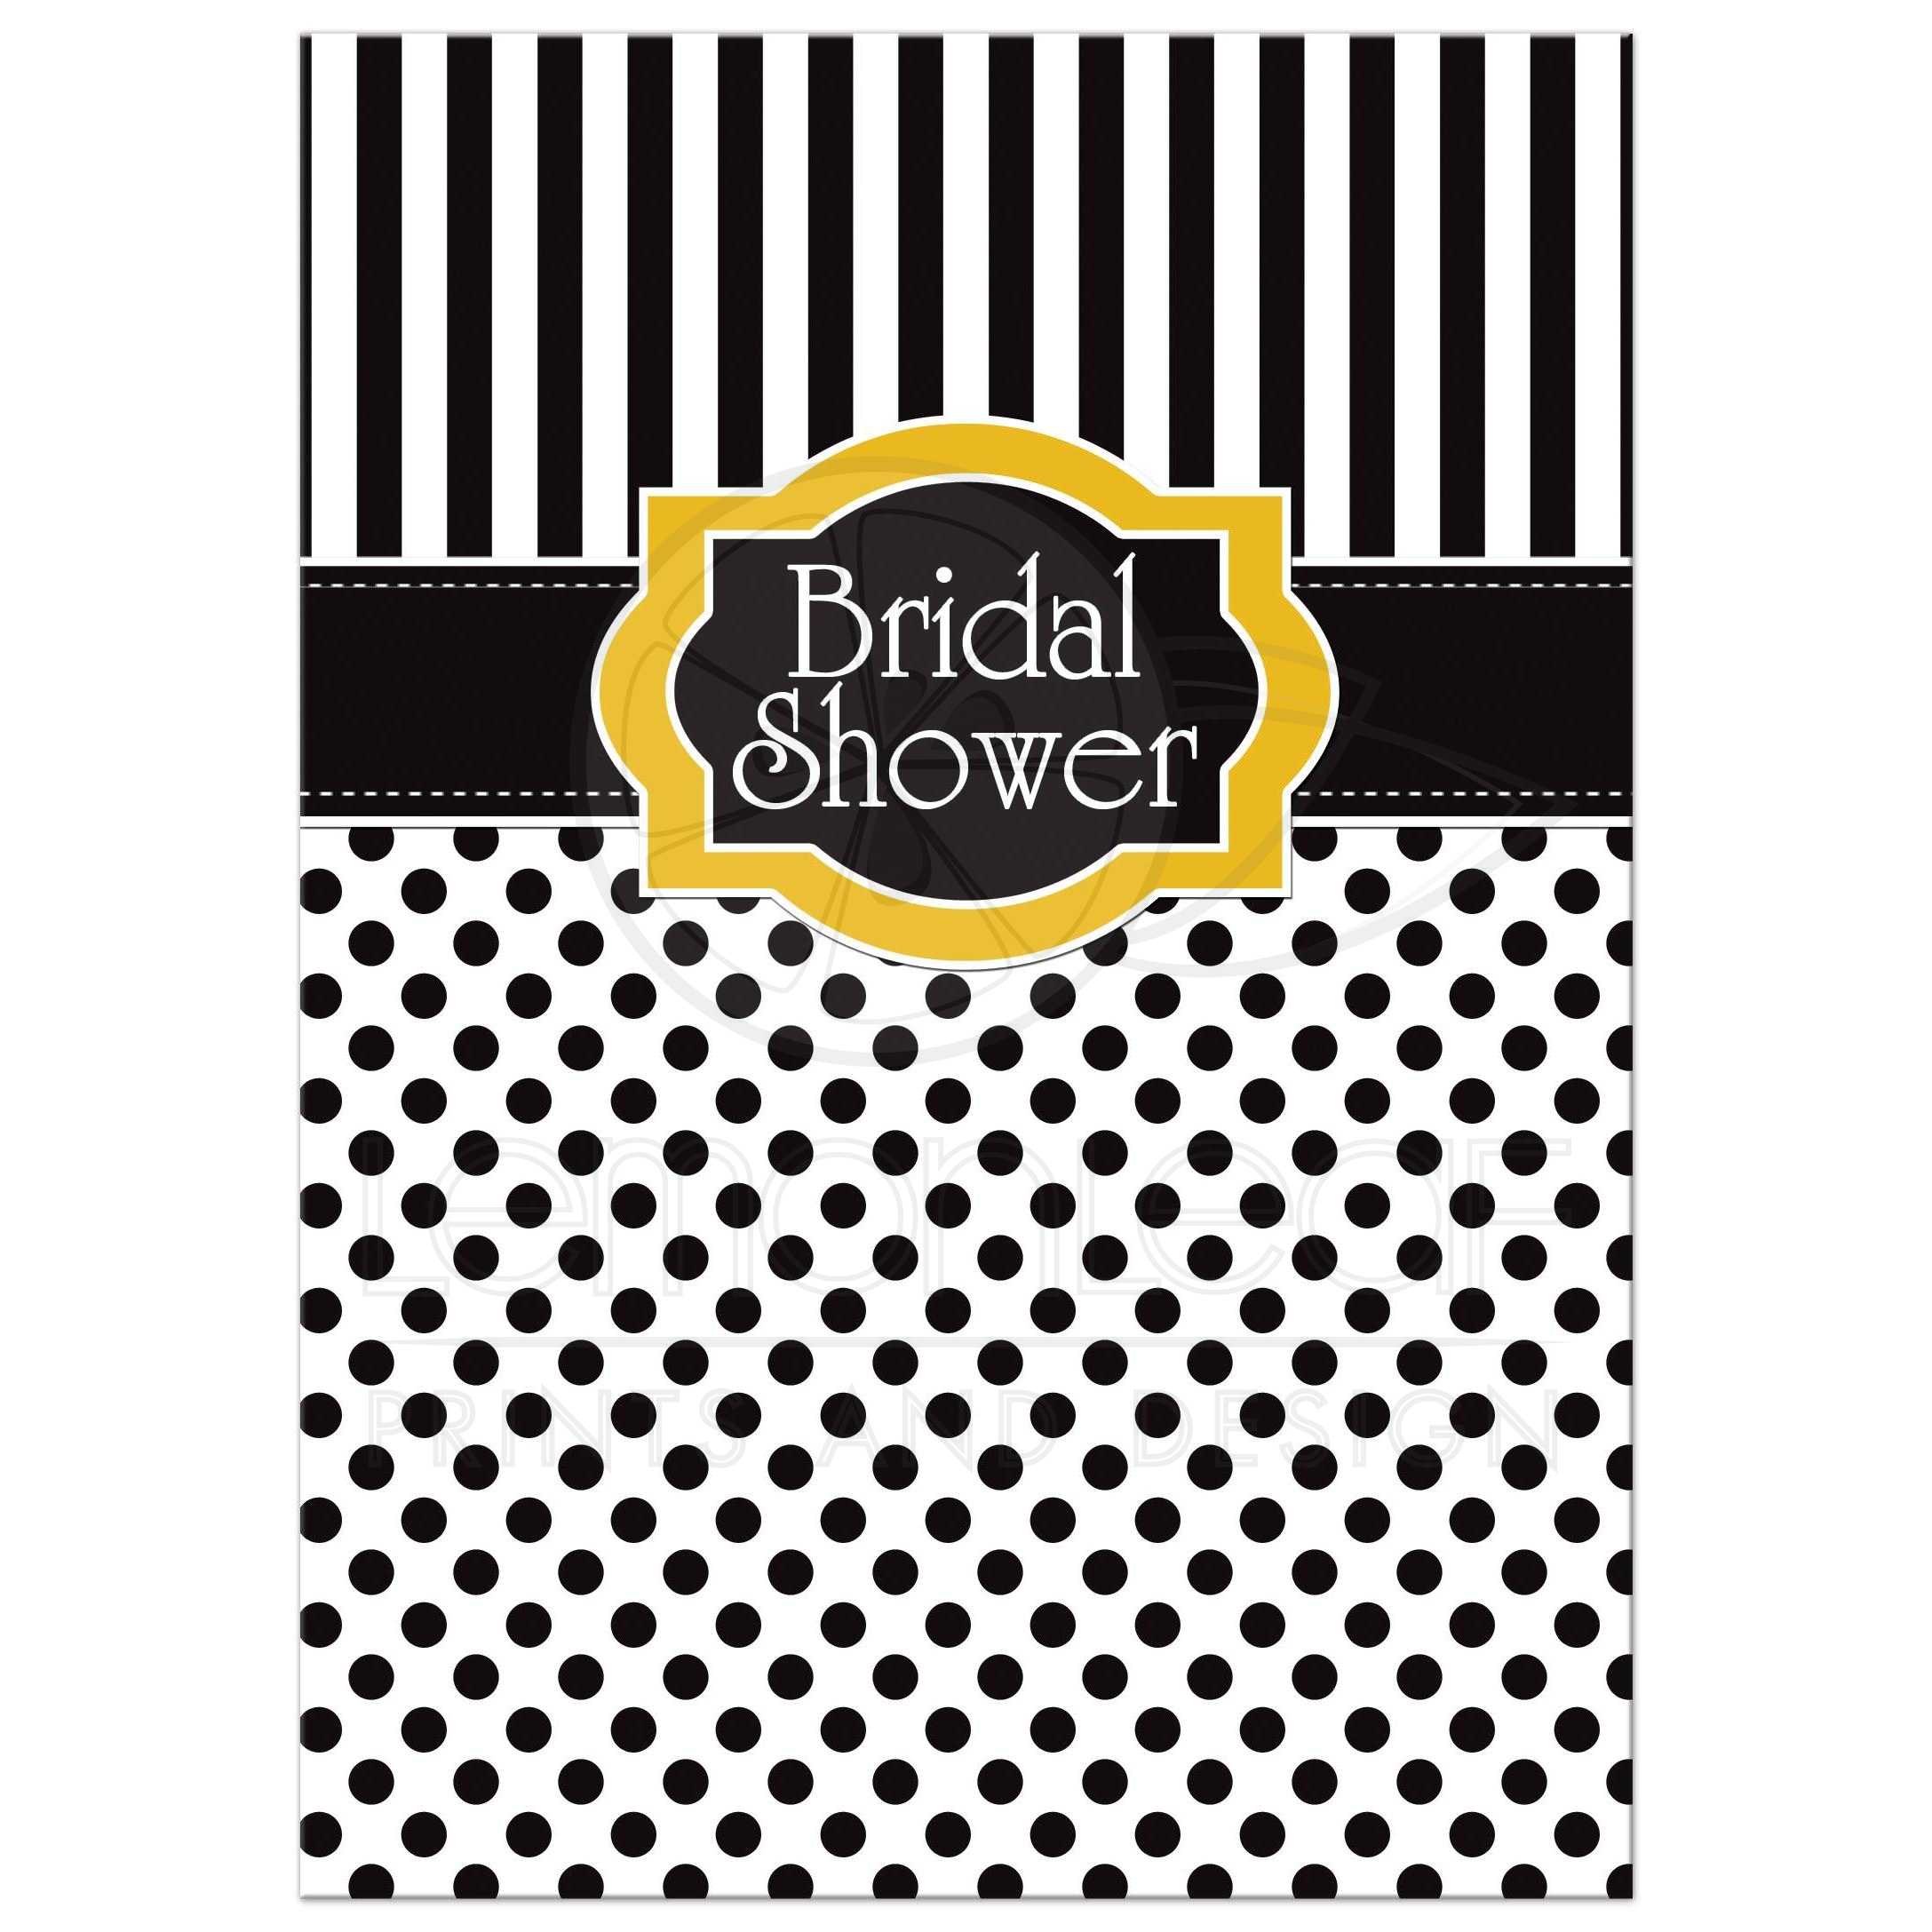 White Stripes with Yellow Logo - Bridal Shower Invitation | Black, White, Yellow | Polka Dots and Stripes